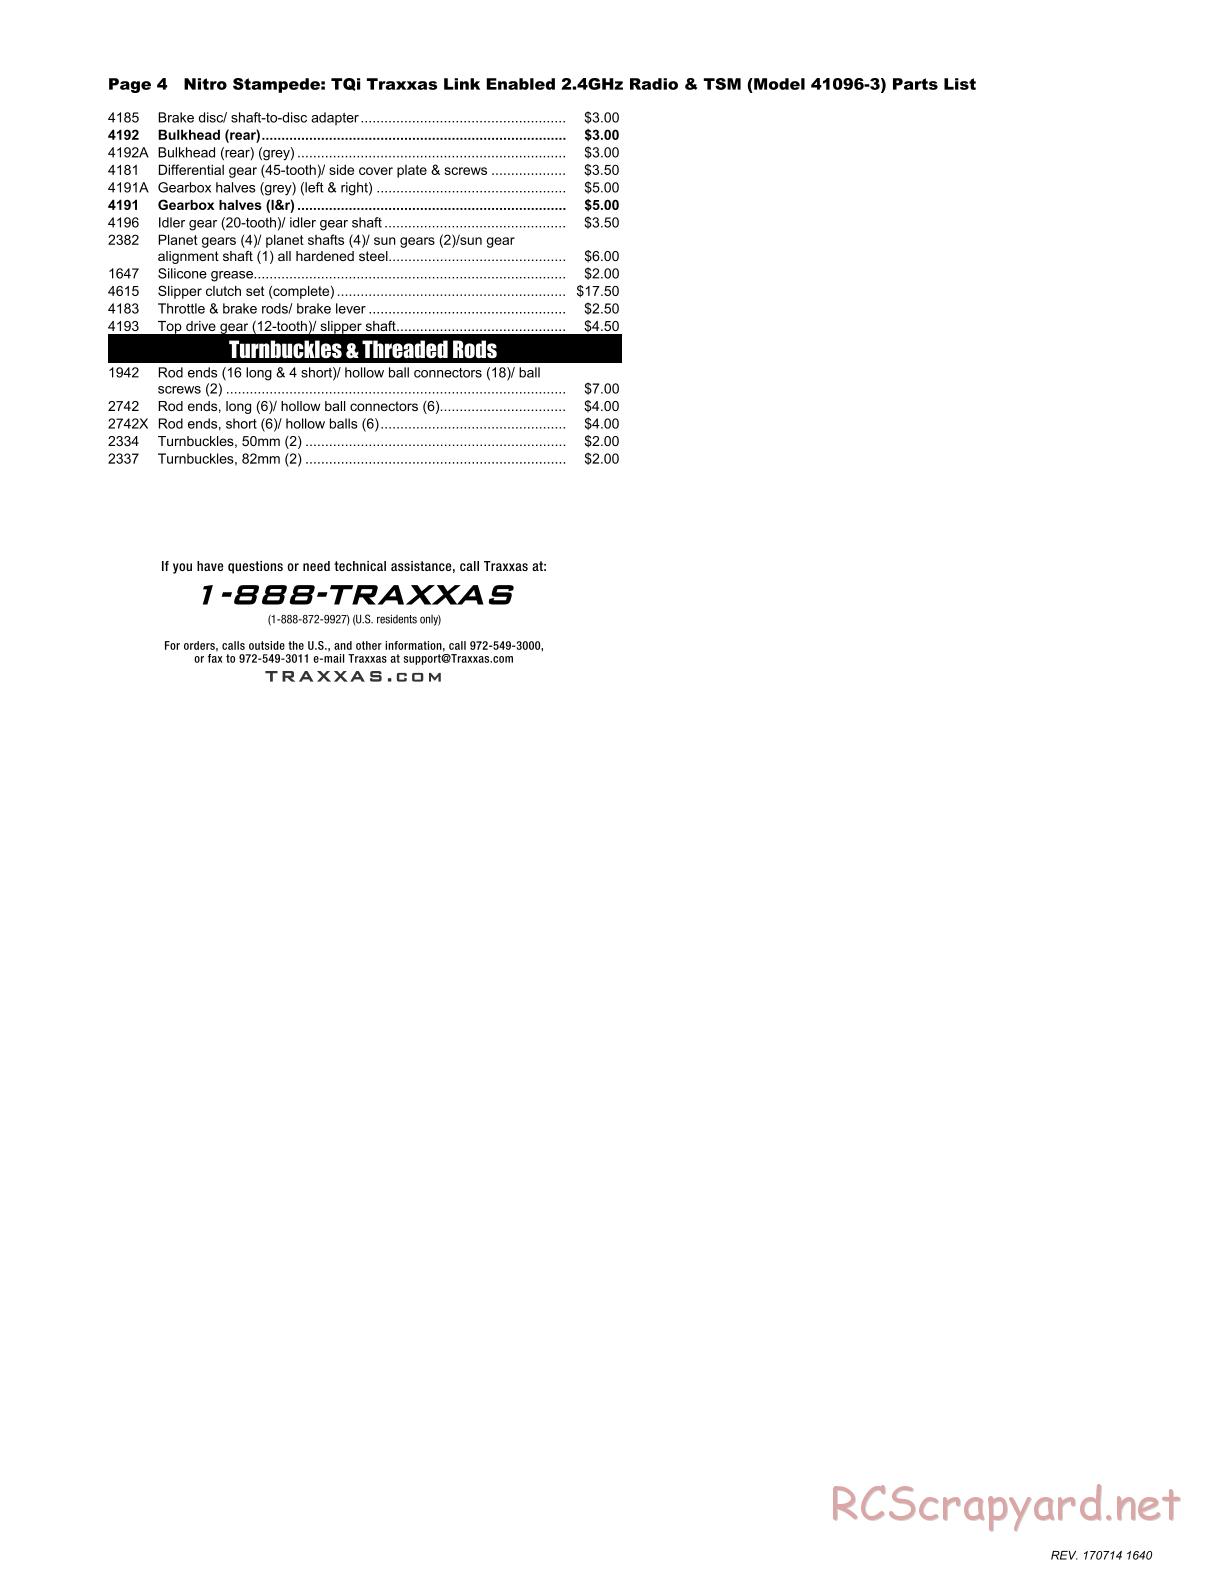 Traxxas - Nitro Stampede TSM - Parts List - Page 4